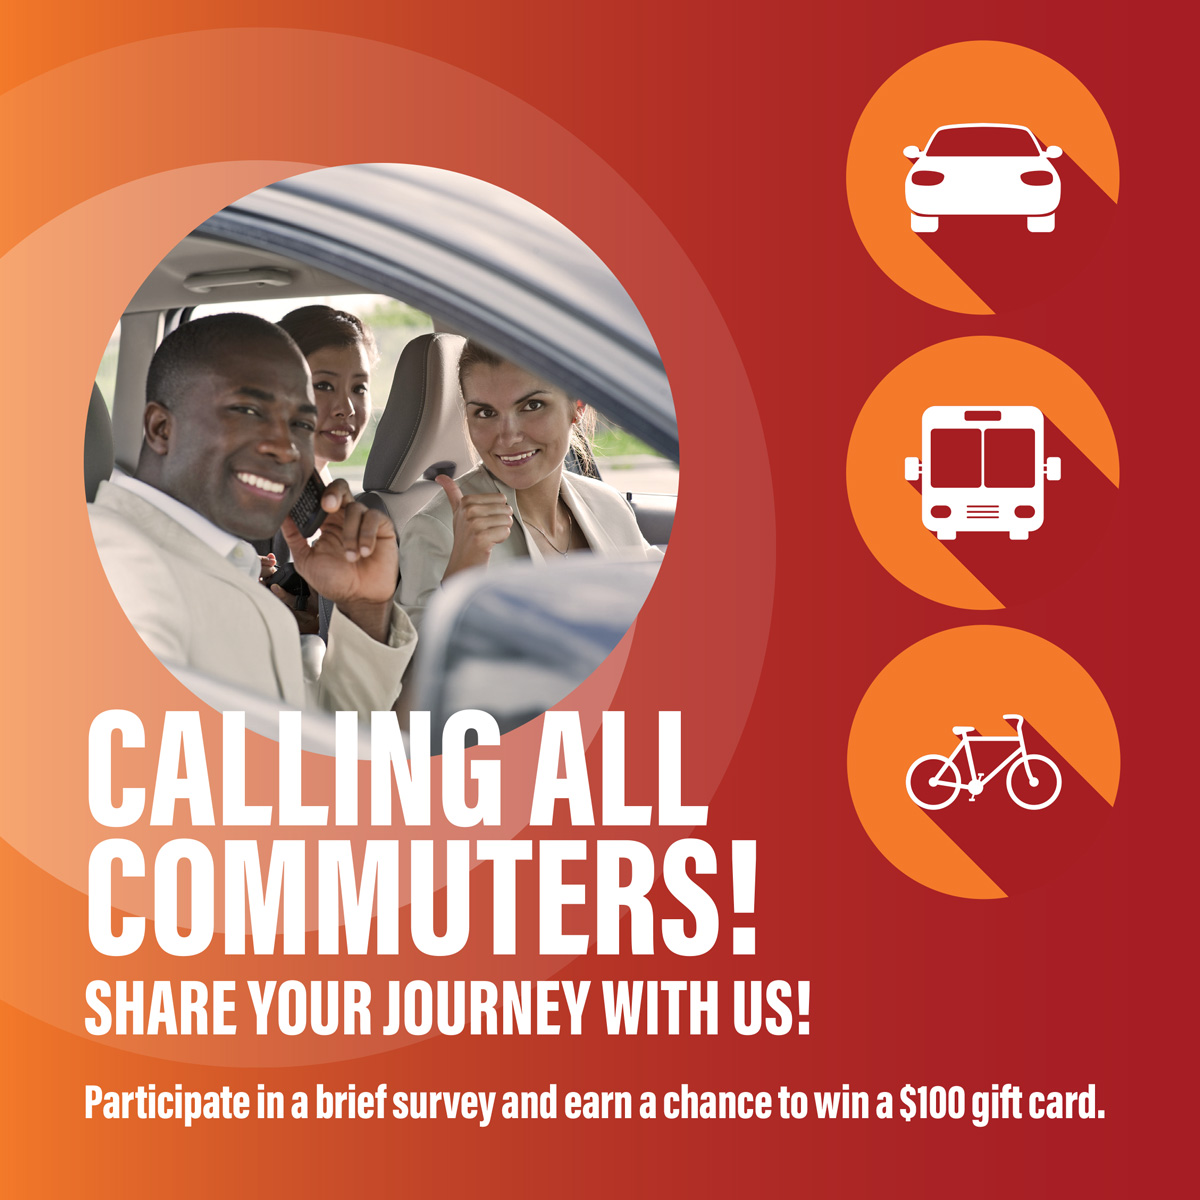 commuter needs social rideshare